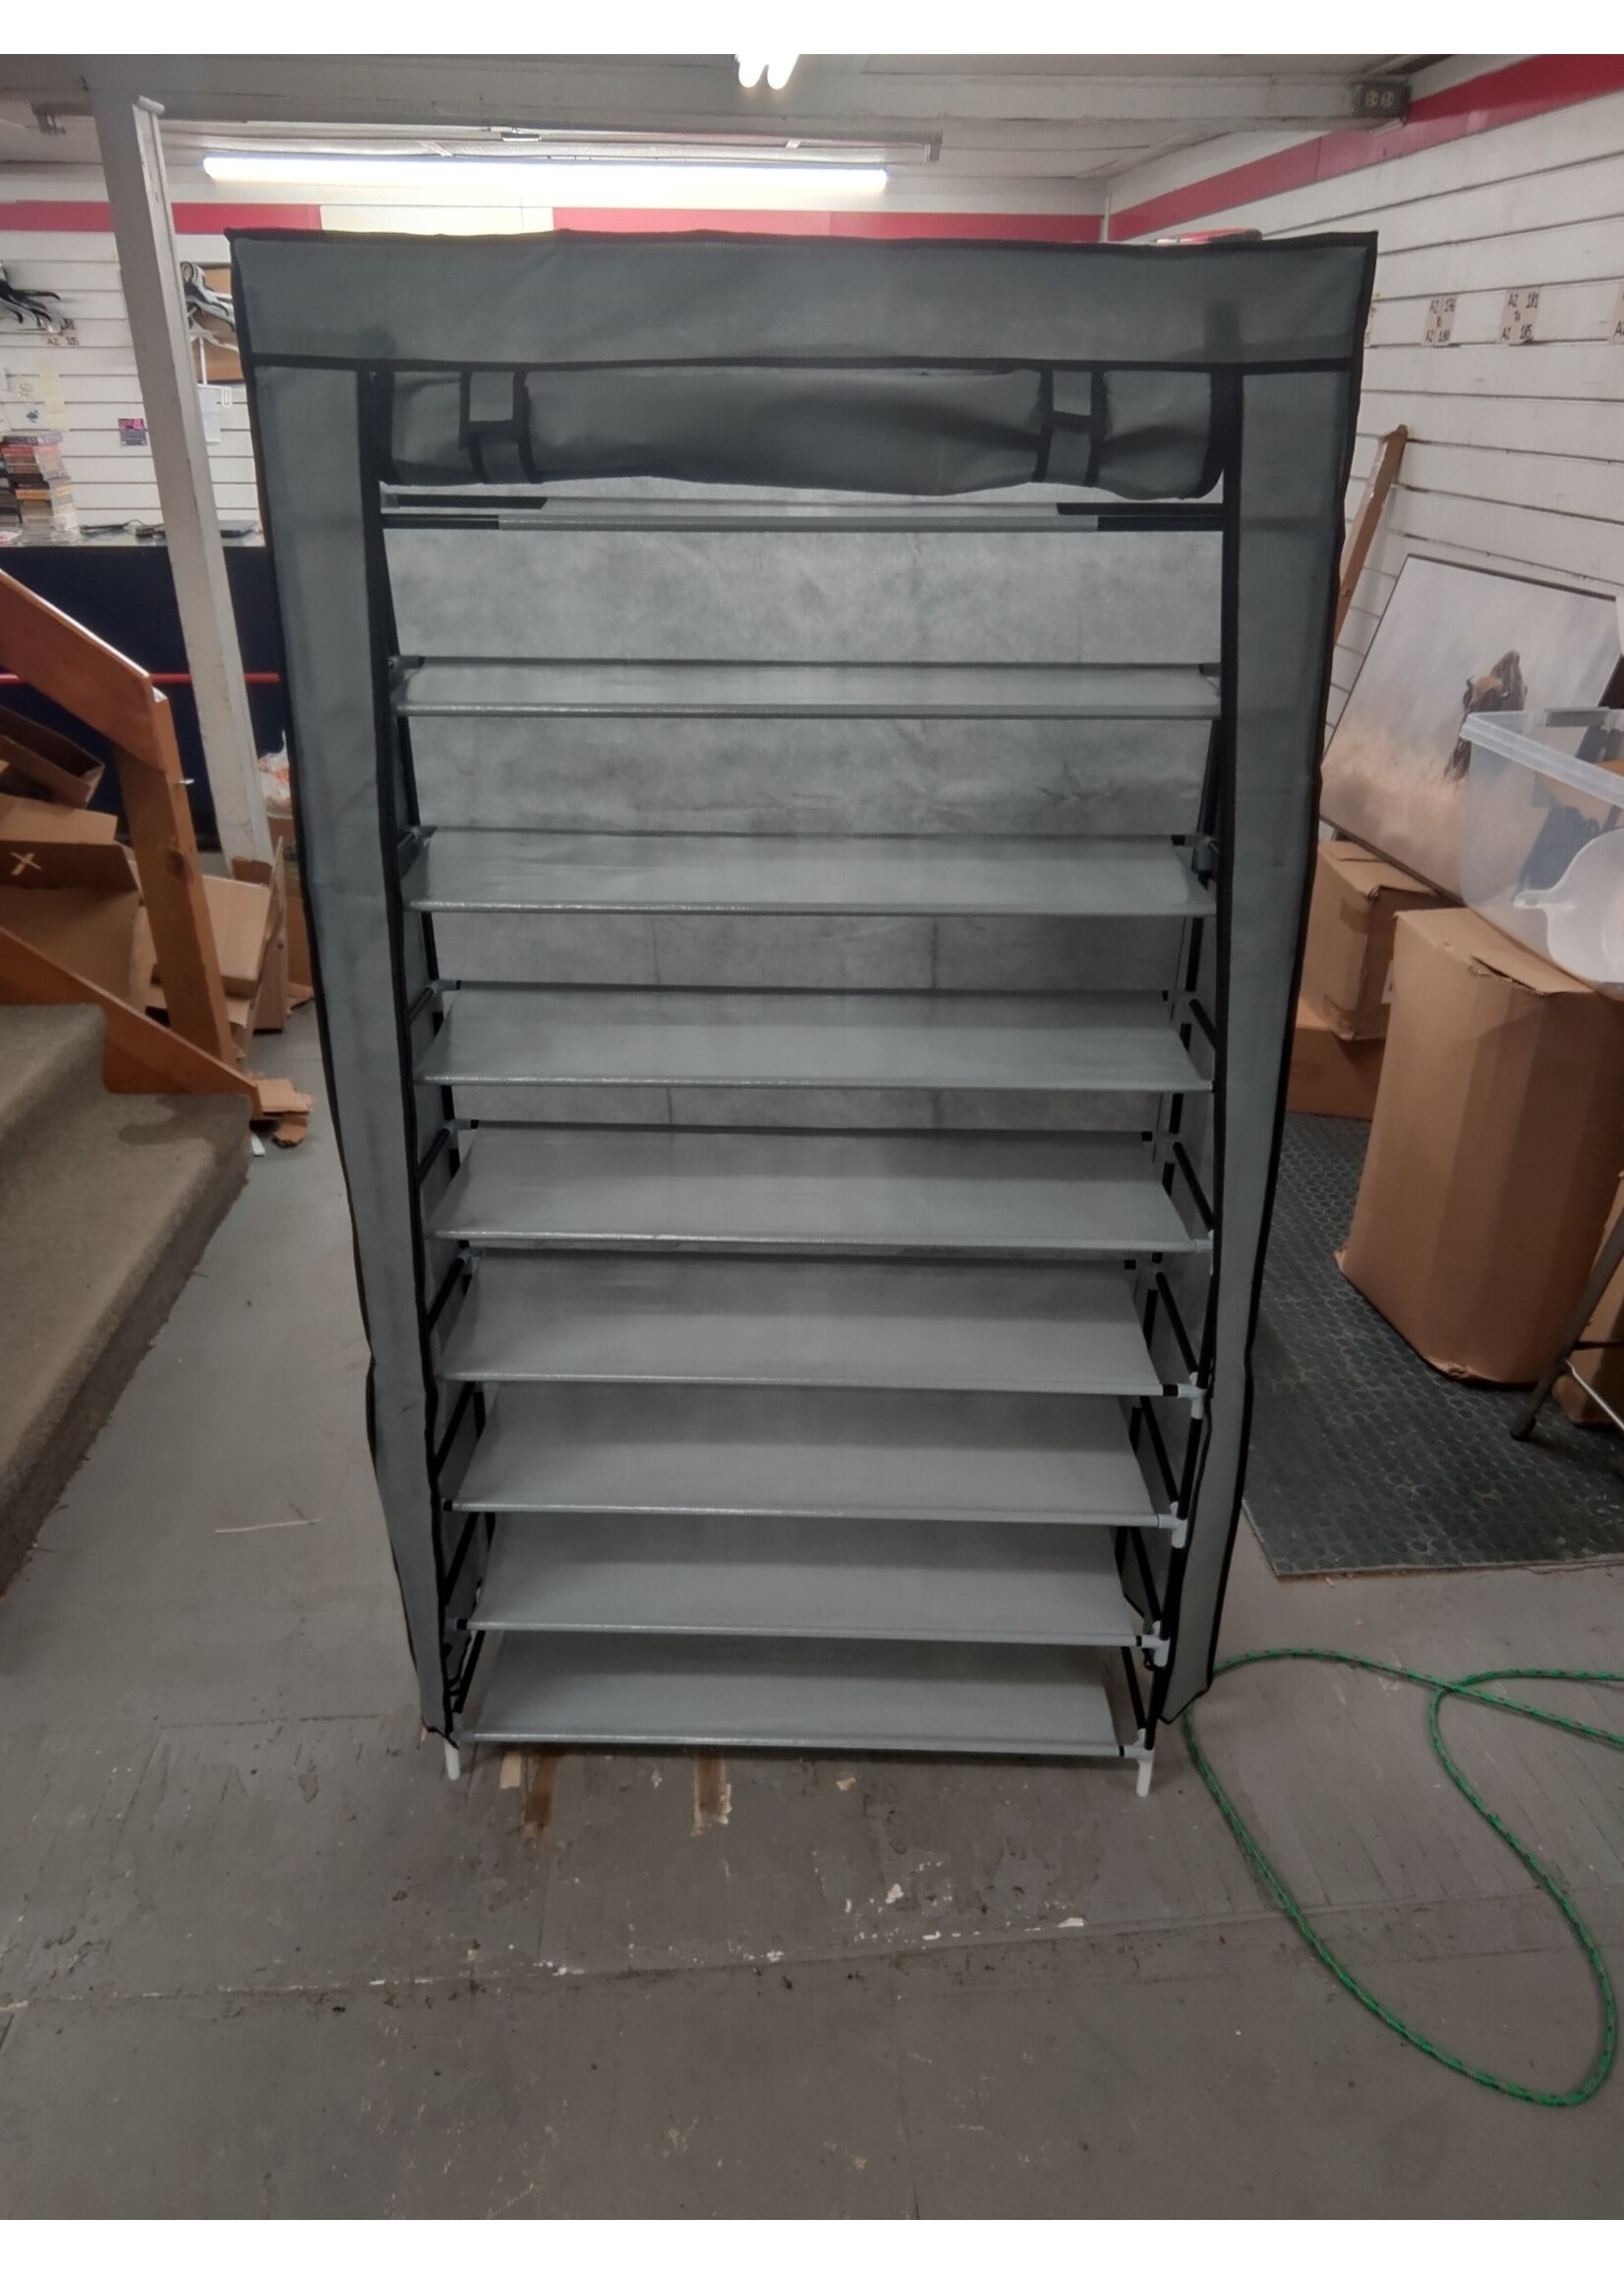 64x34x11 9-Tier Tall Shoe Rack with Dustproof Cover Shoe Shelf Storage Organizer Stand